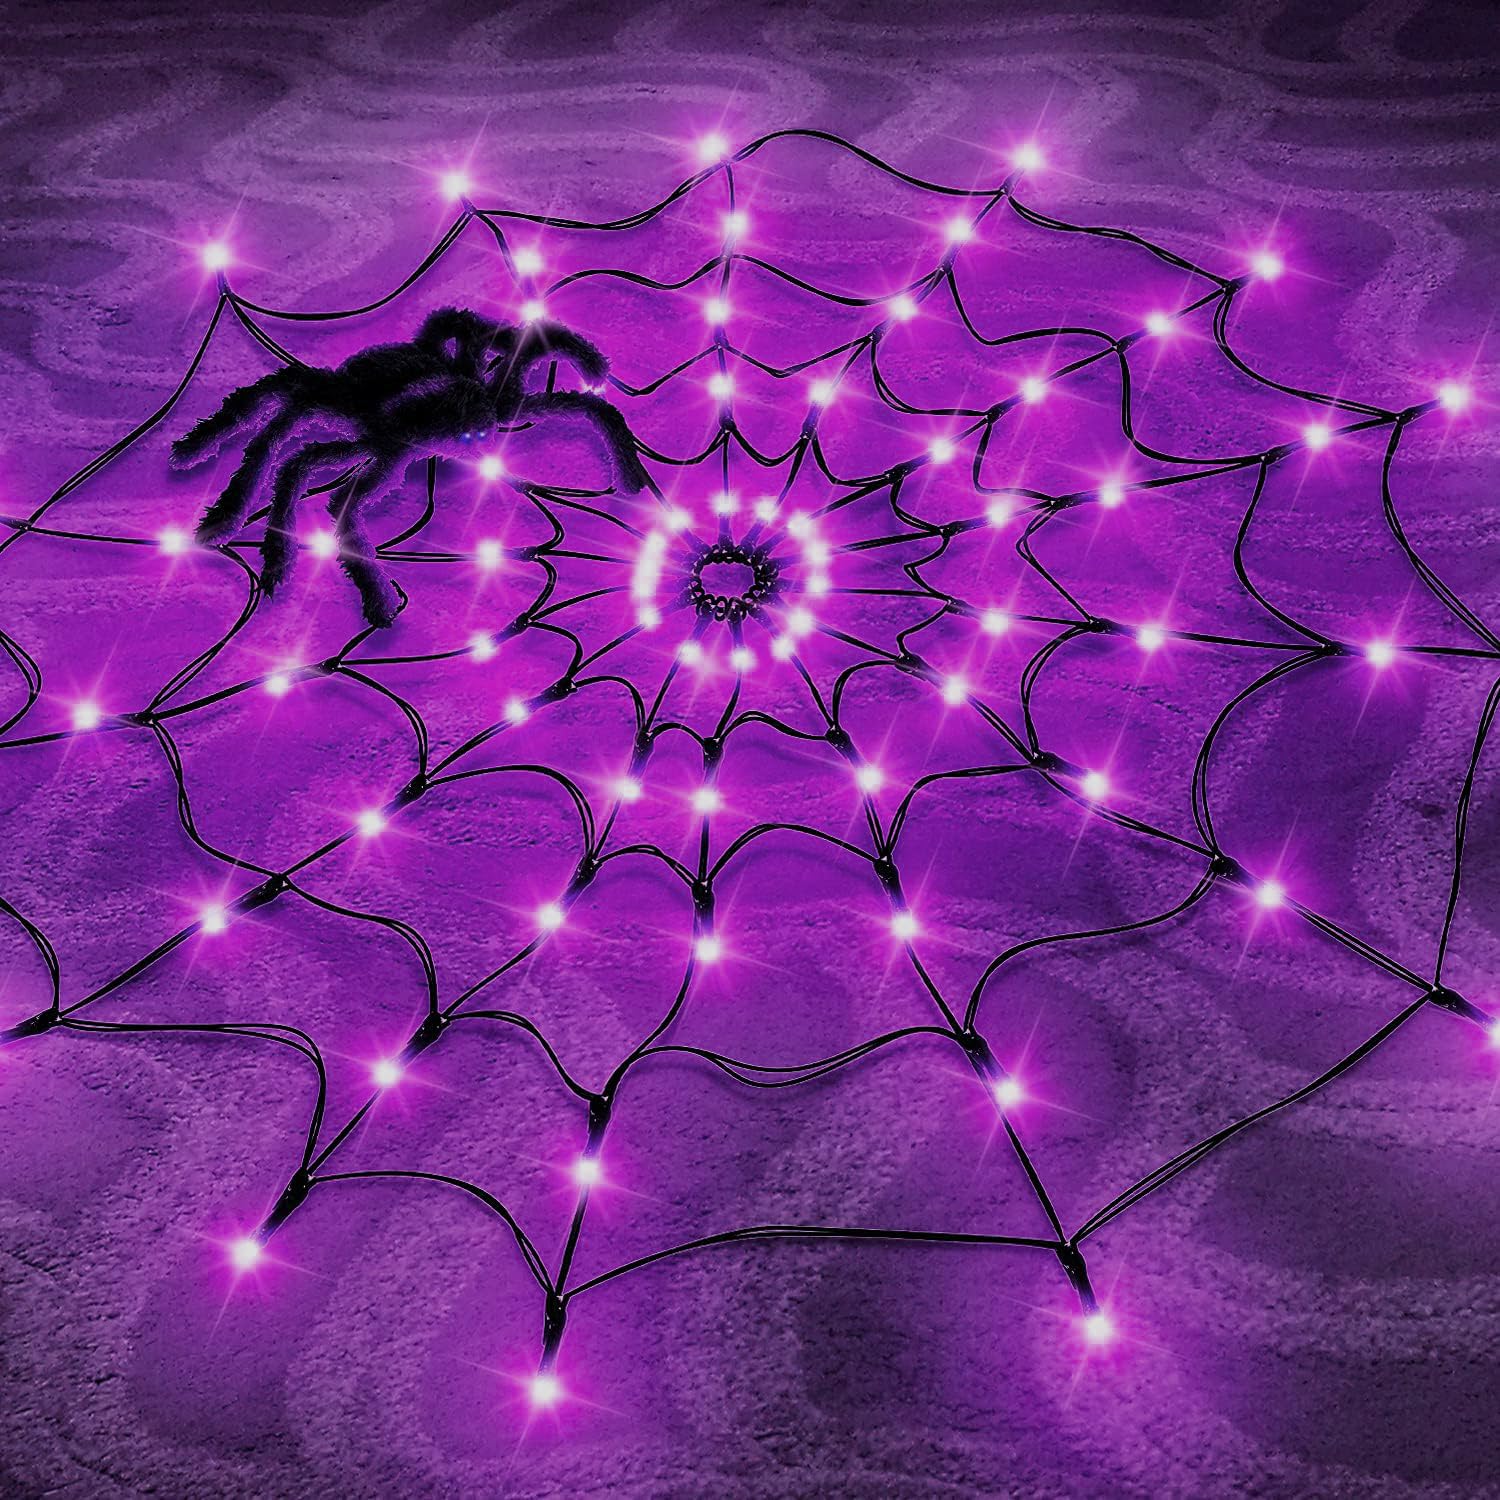 Spider Web Halloween Decorations Outdoor Lights